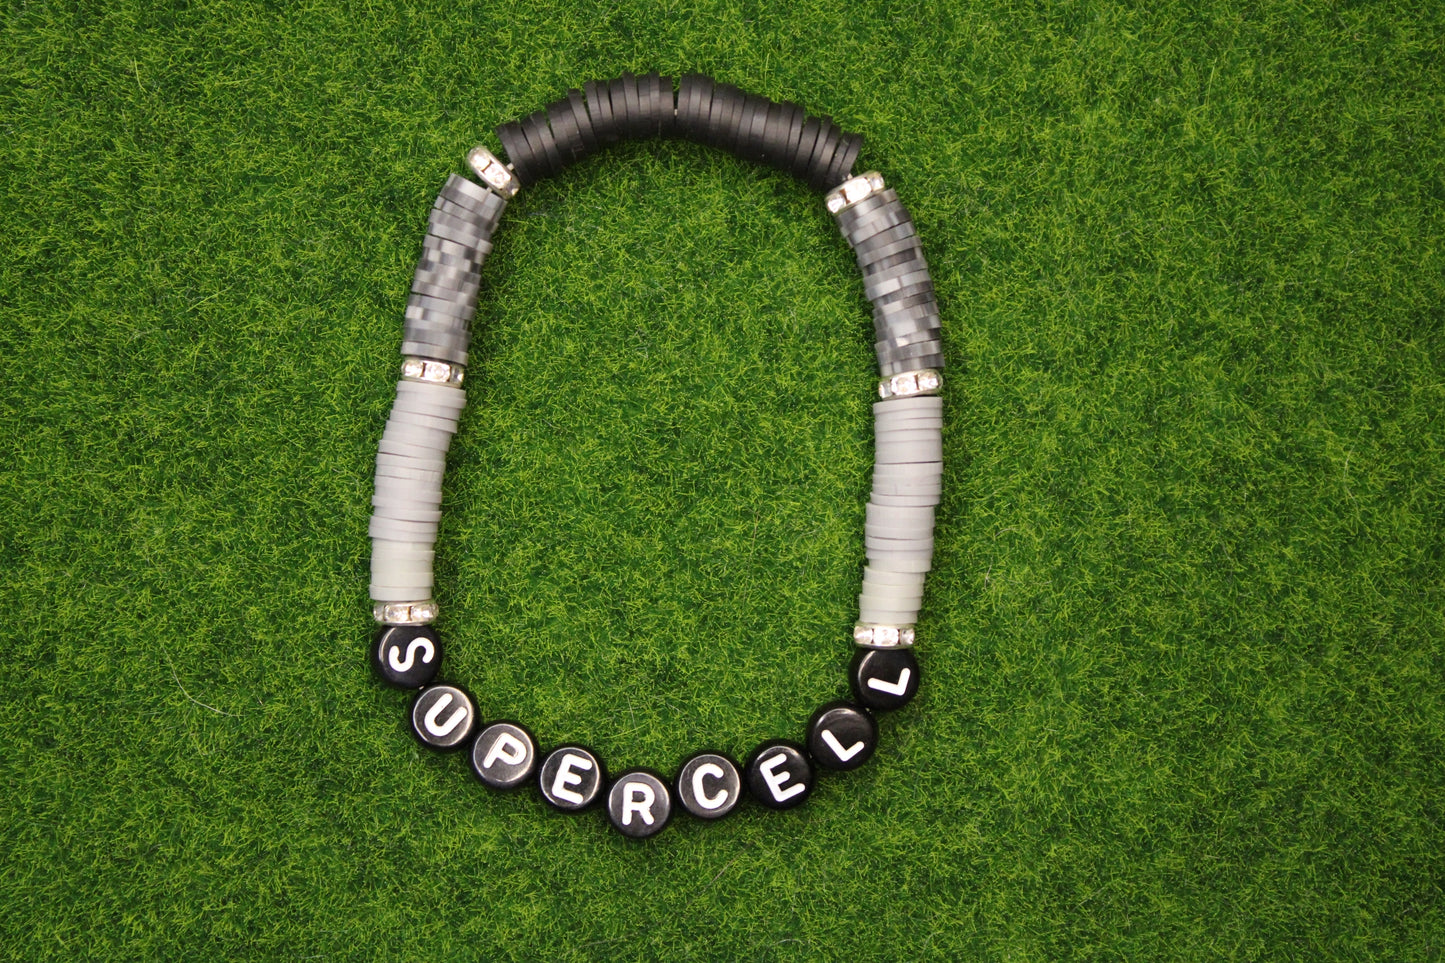 Supercell / Hail Core Bracelets